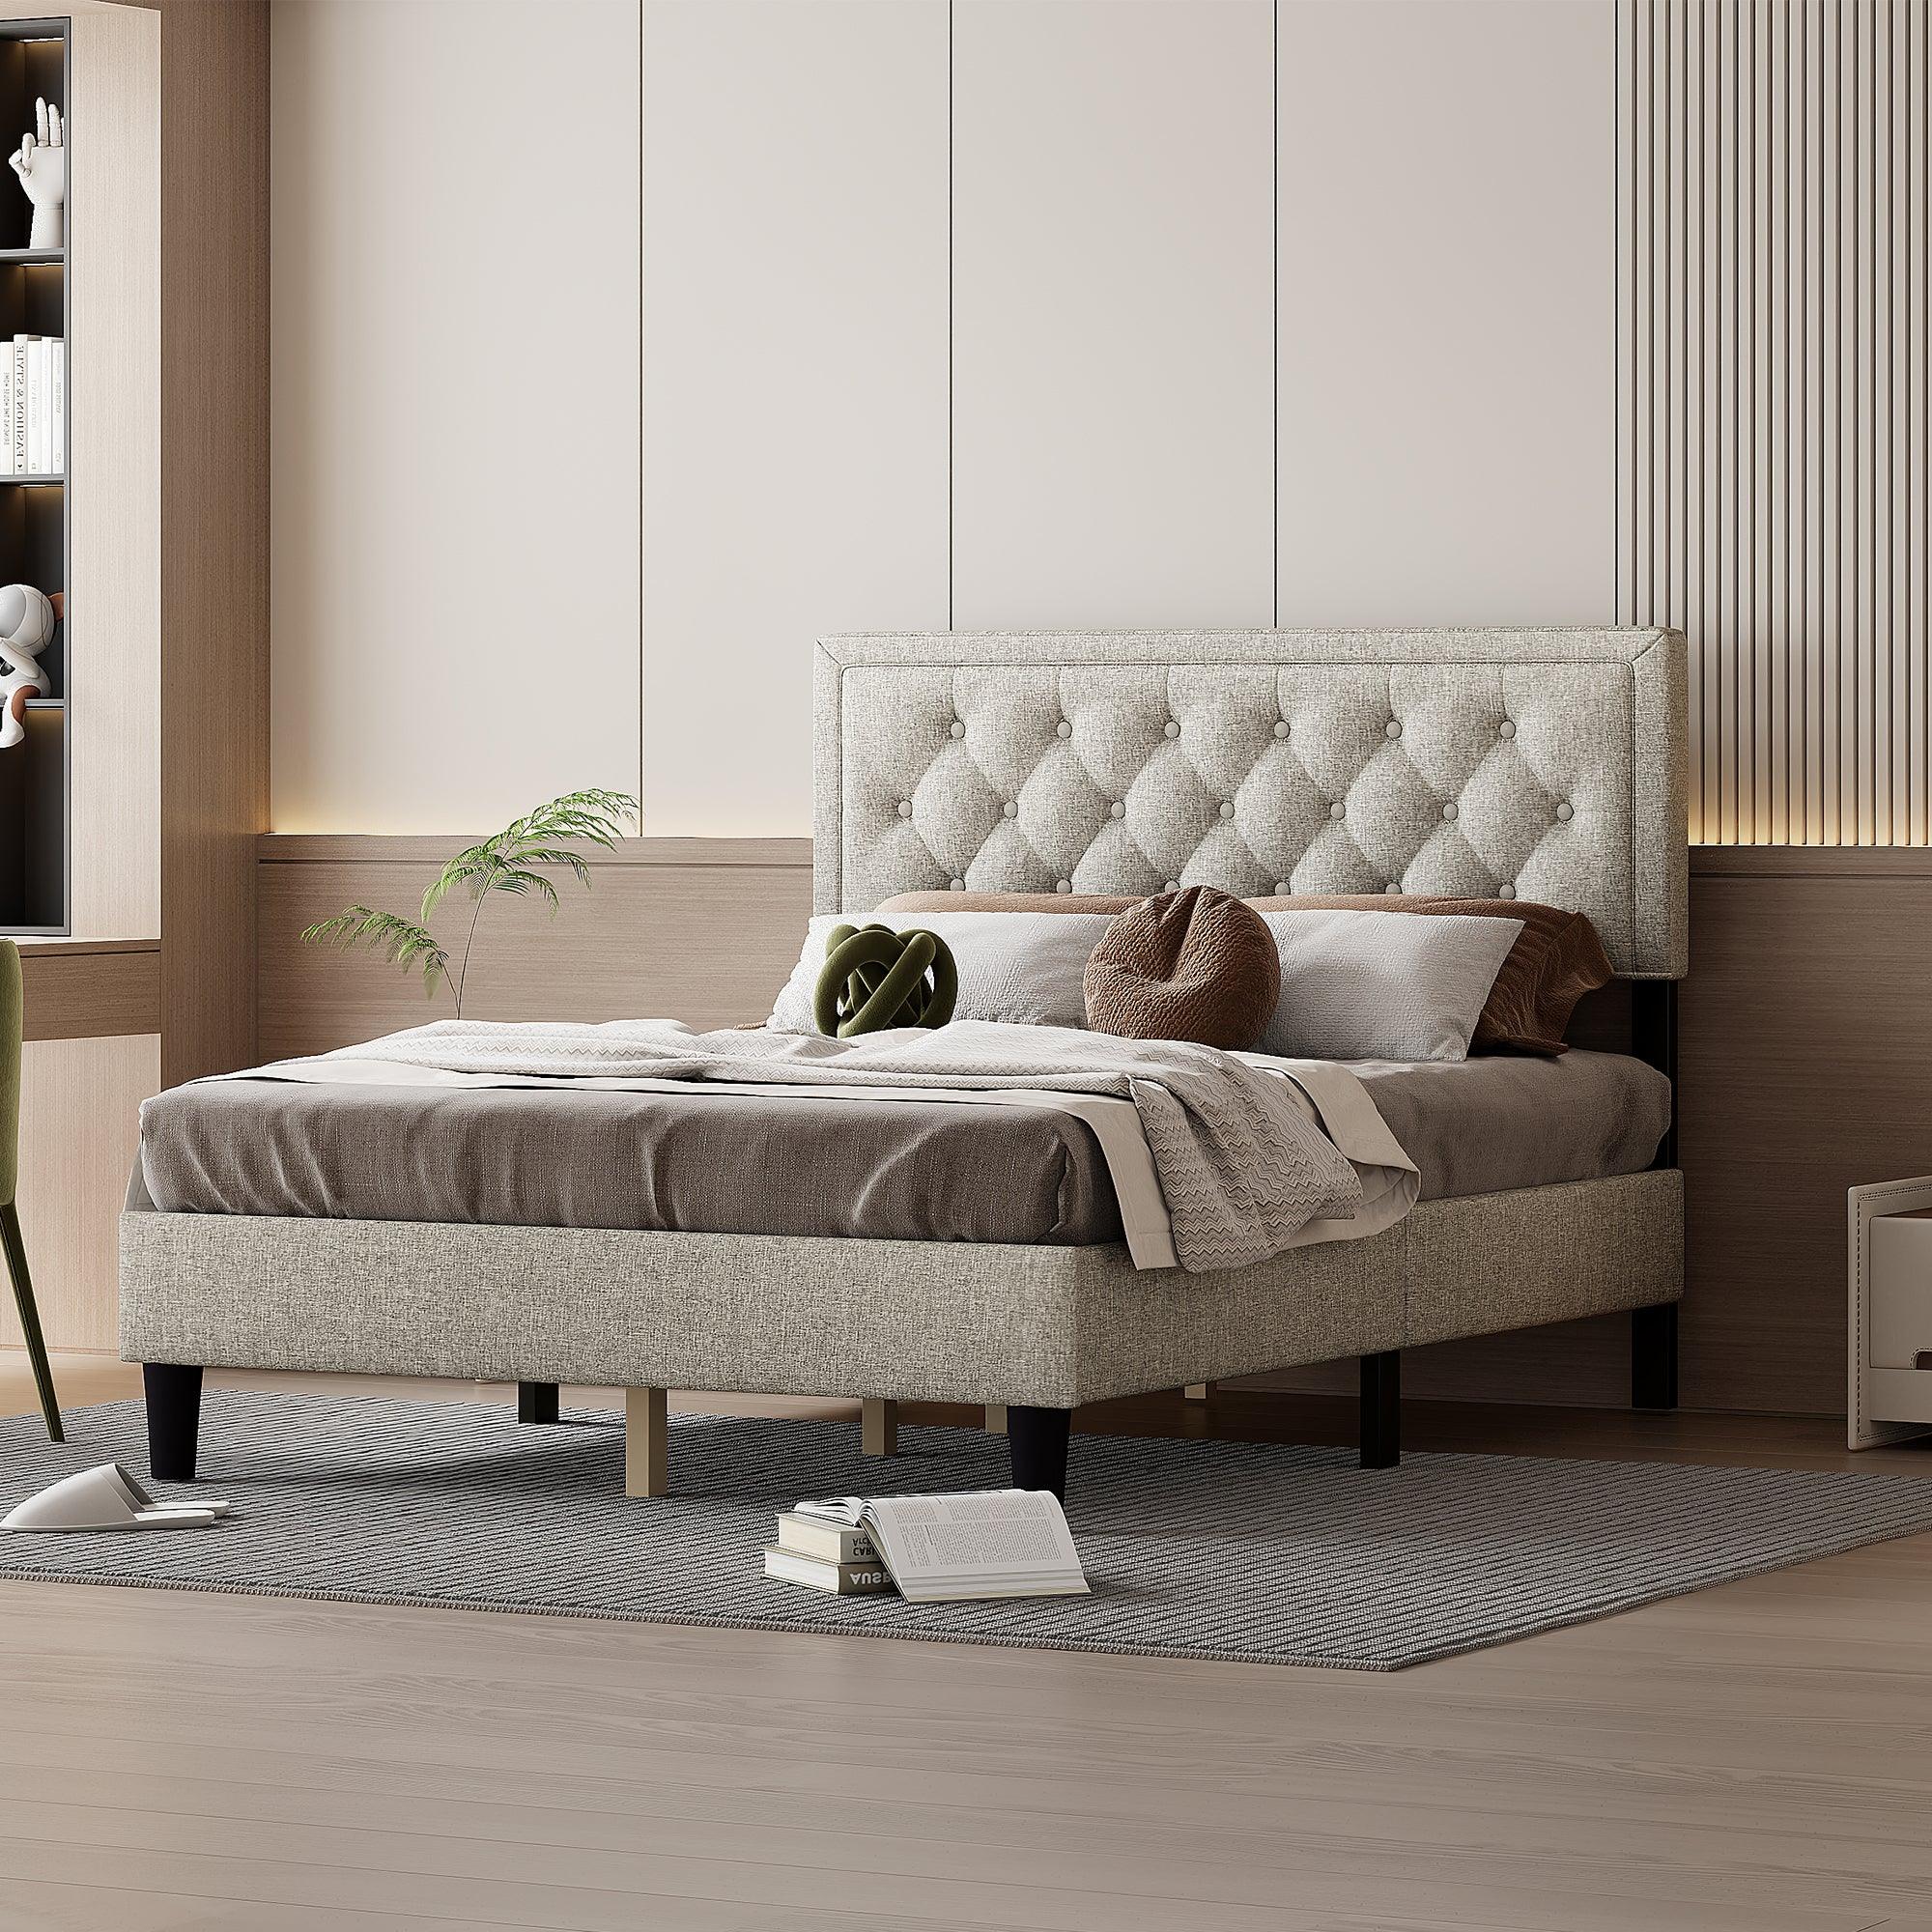 🆓🚛 King Size Panel Bed Frame With Adjustable Button-Tufted Headboard for Bedroom/Linen Upholstered/Wood Slat Support/Easy Assembly, Linen Beige